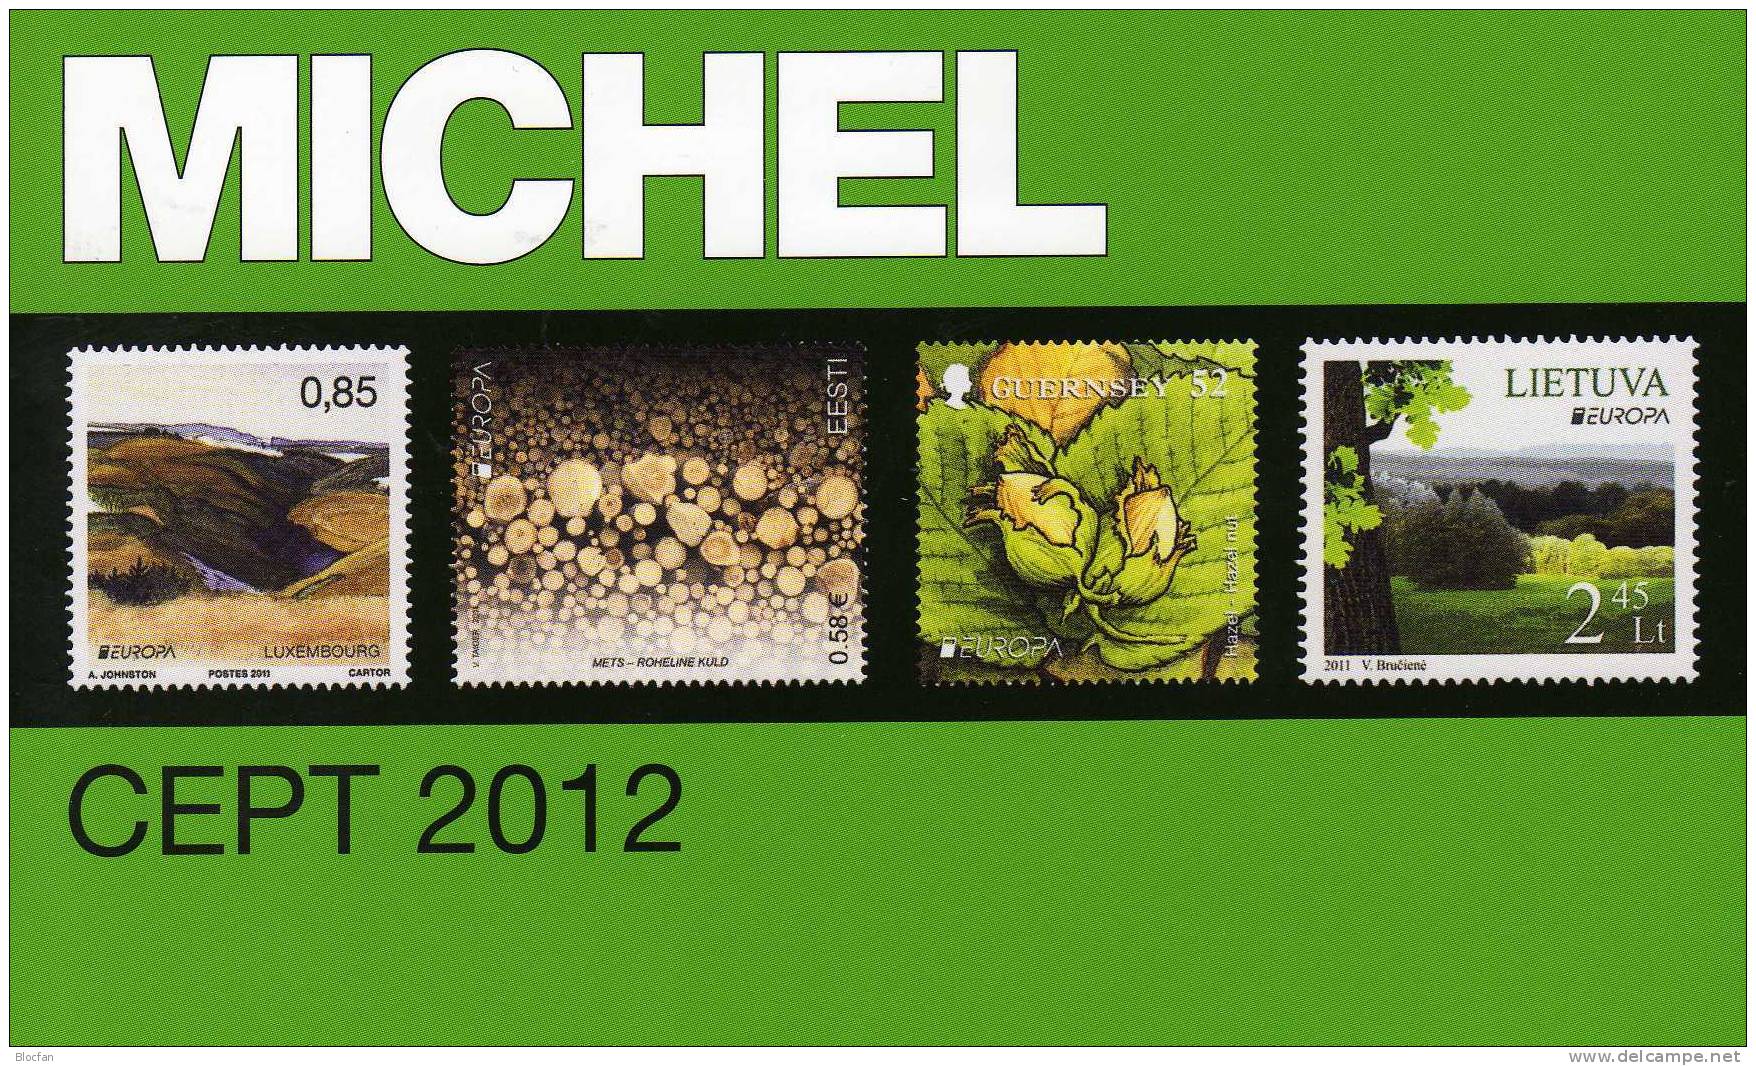 Stamp Catalogue New MlCHEL CEPT 2012 Neu 50€ With Jahrgangs-Tabelle Europa Vorläufer NATO EFTA KSZE Symphatie-Ausgaben - Collezioni